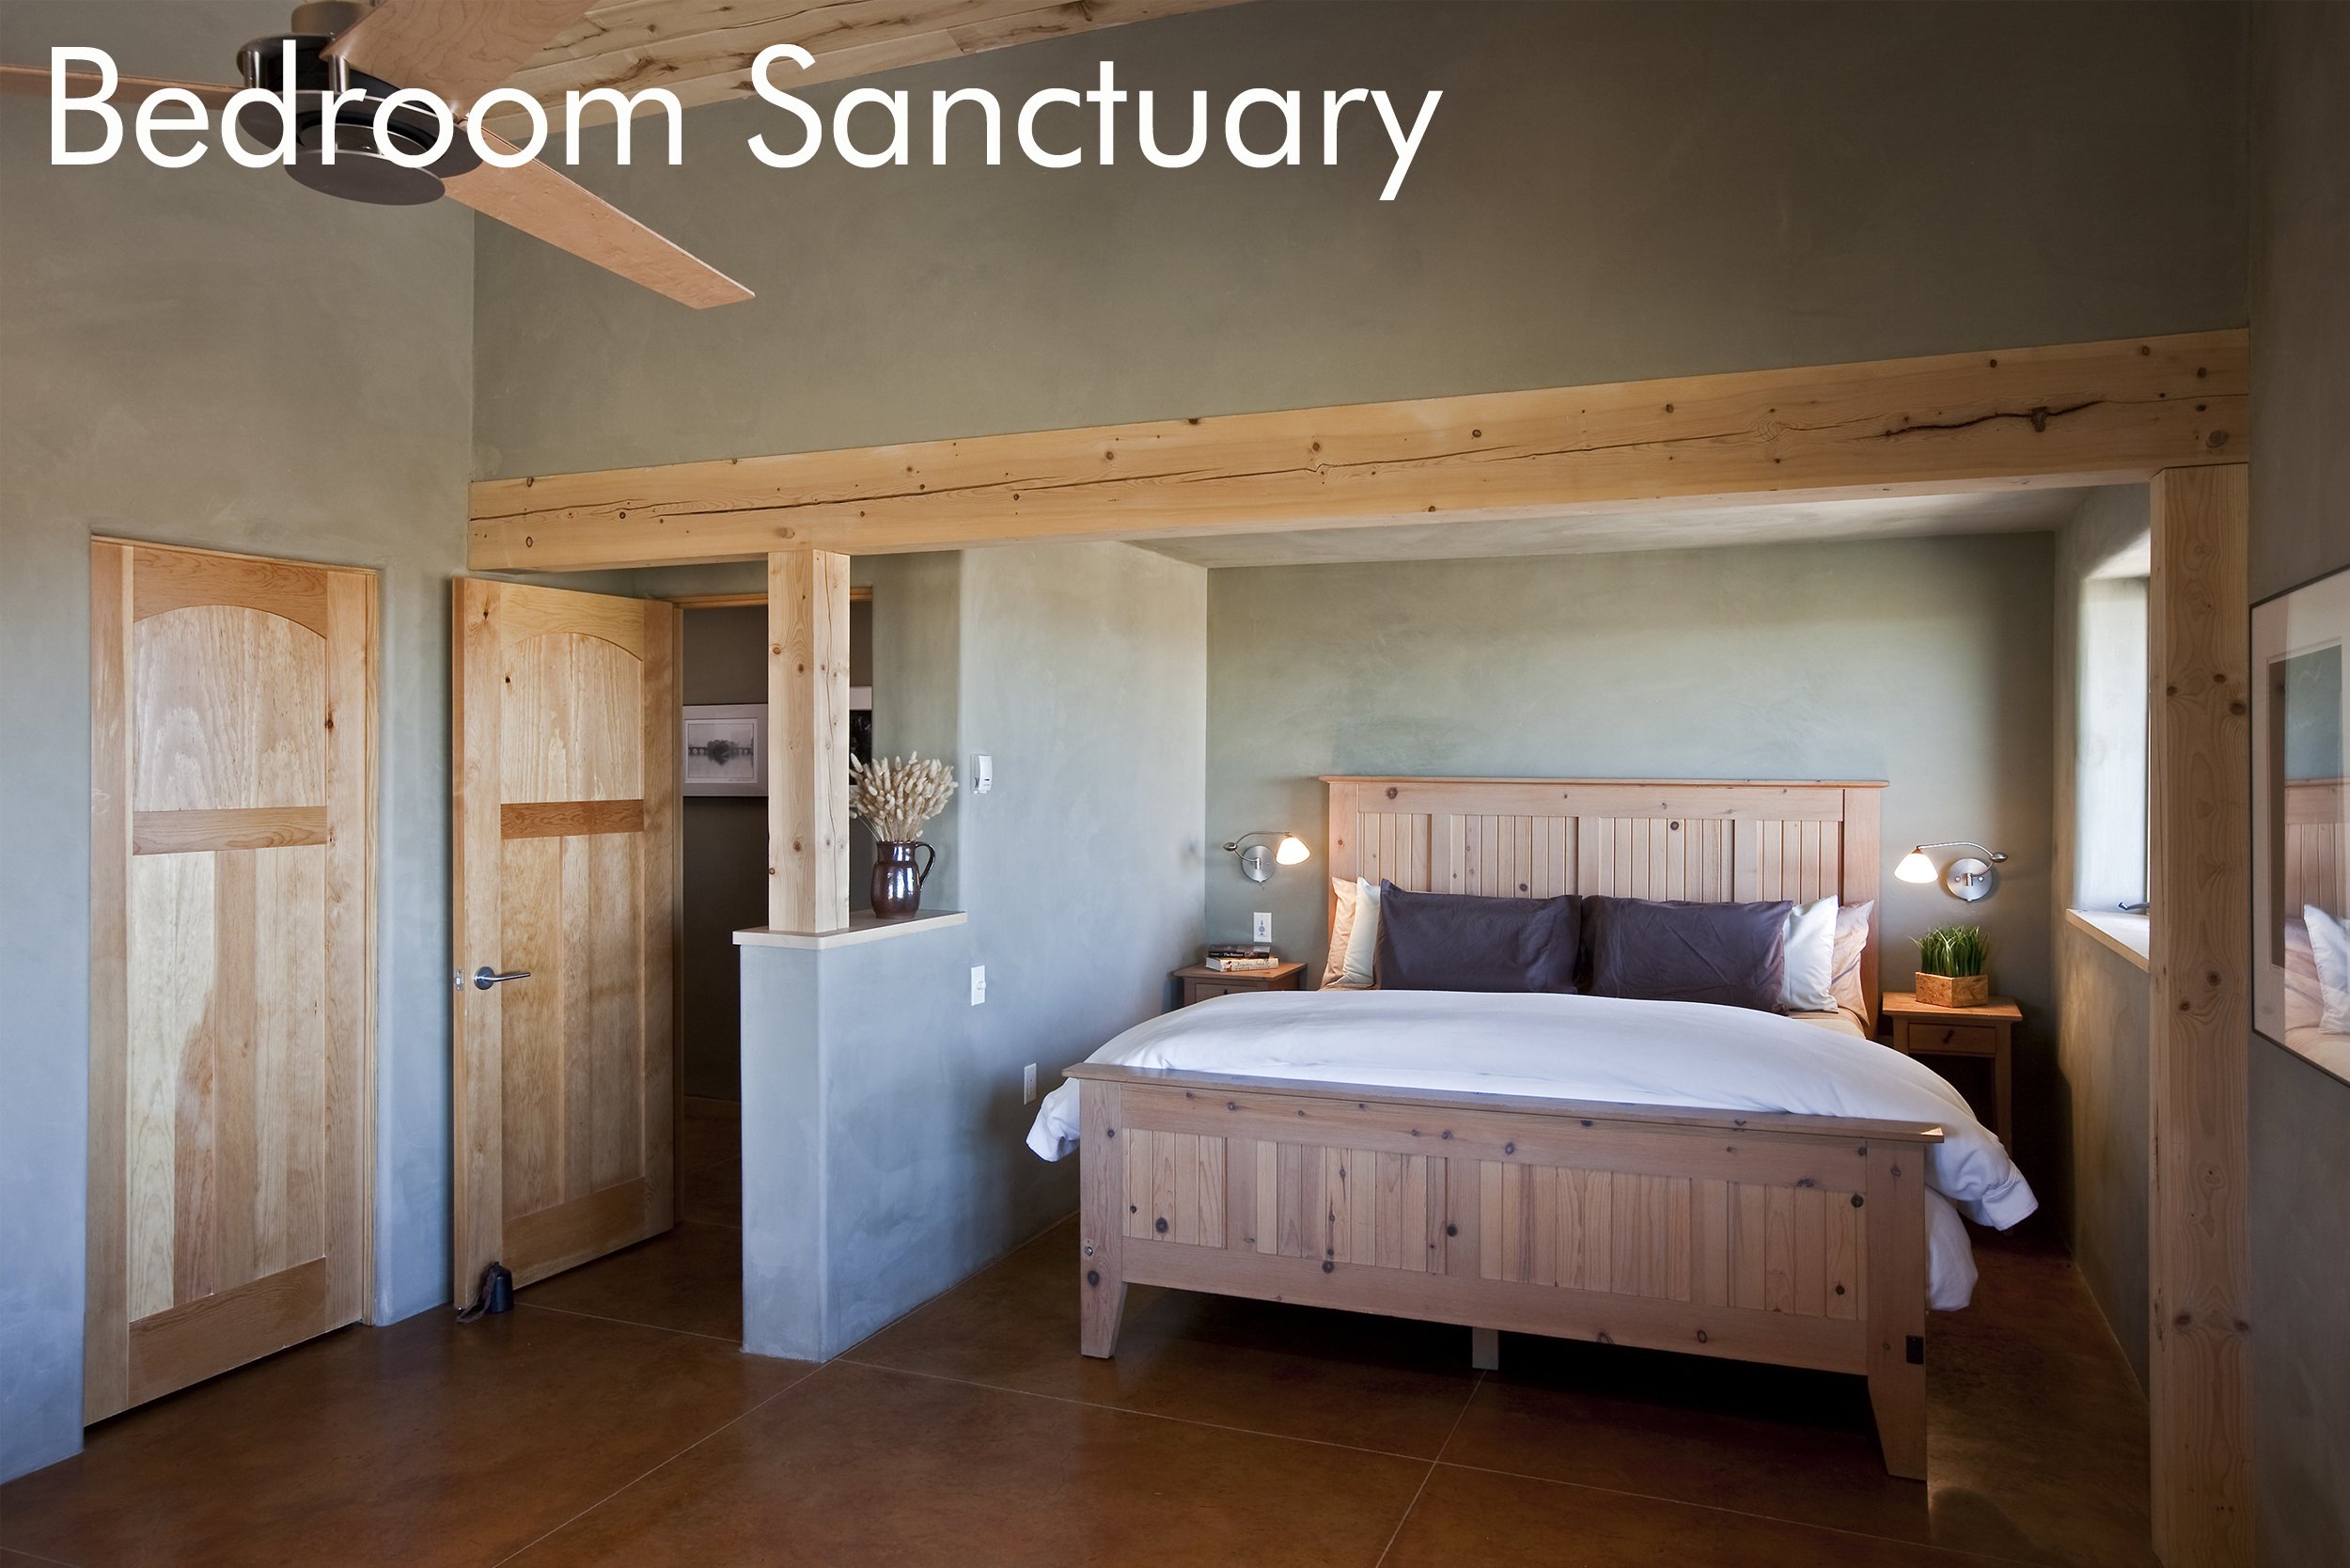 Bedroom sanctuary 1.jpg